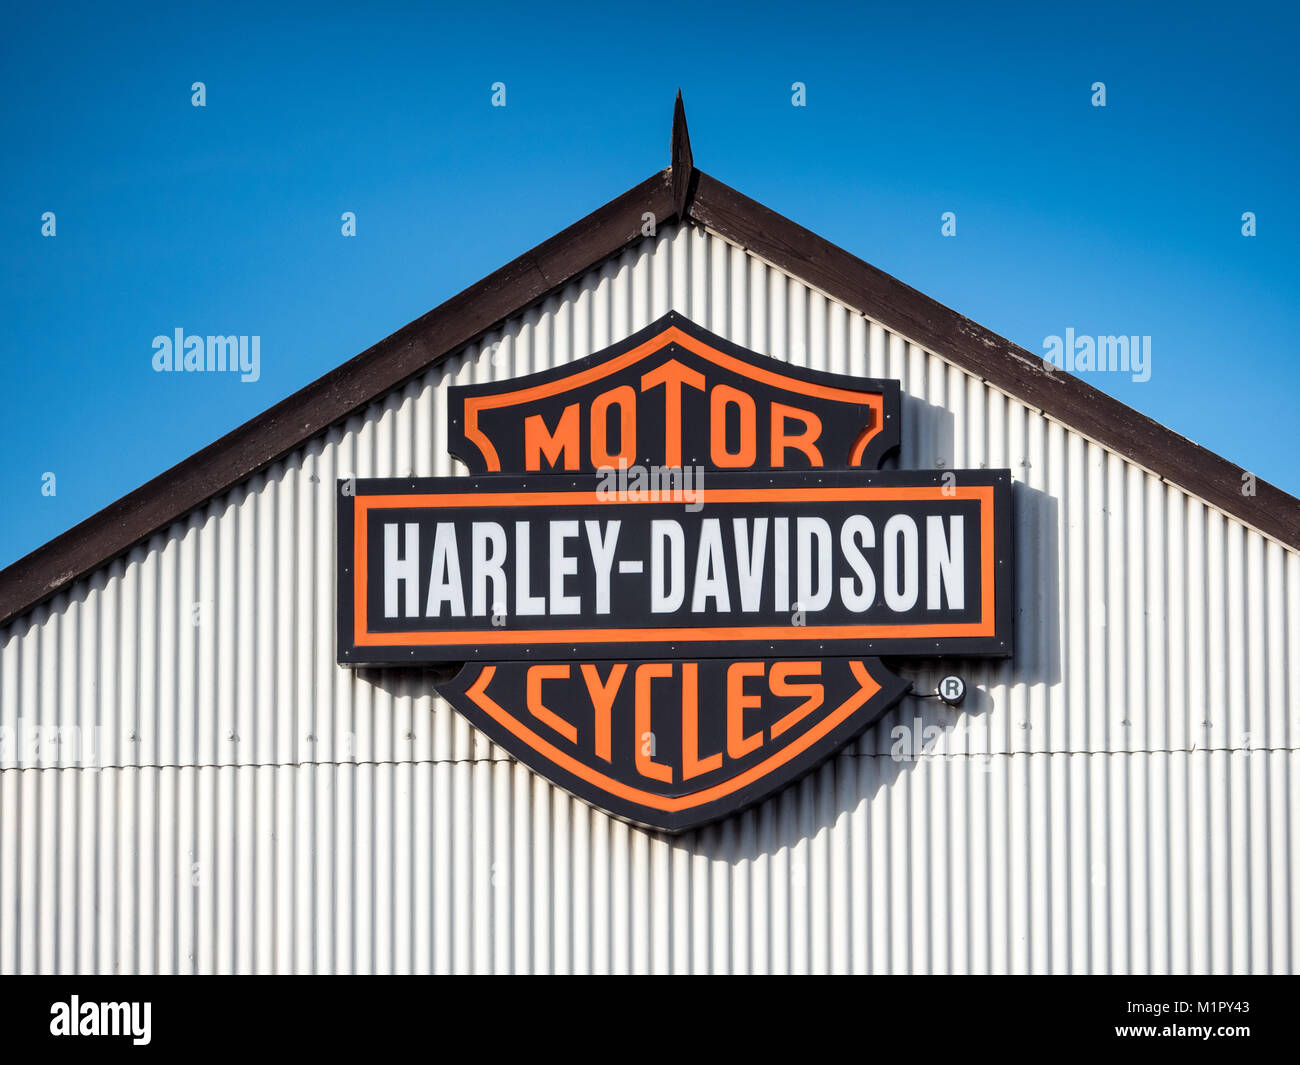 Harley Davidson Sign - sign on a Harley Davidson dealership in the UK Stock Photo